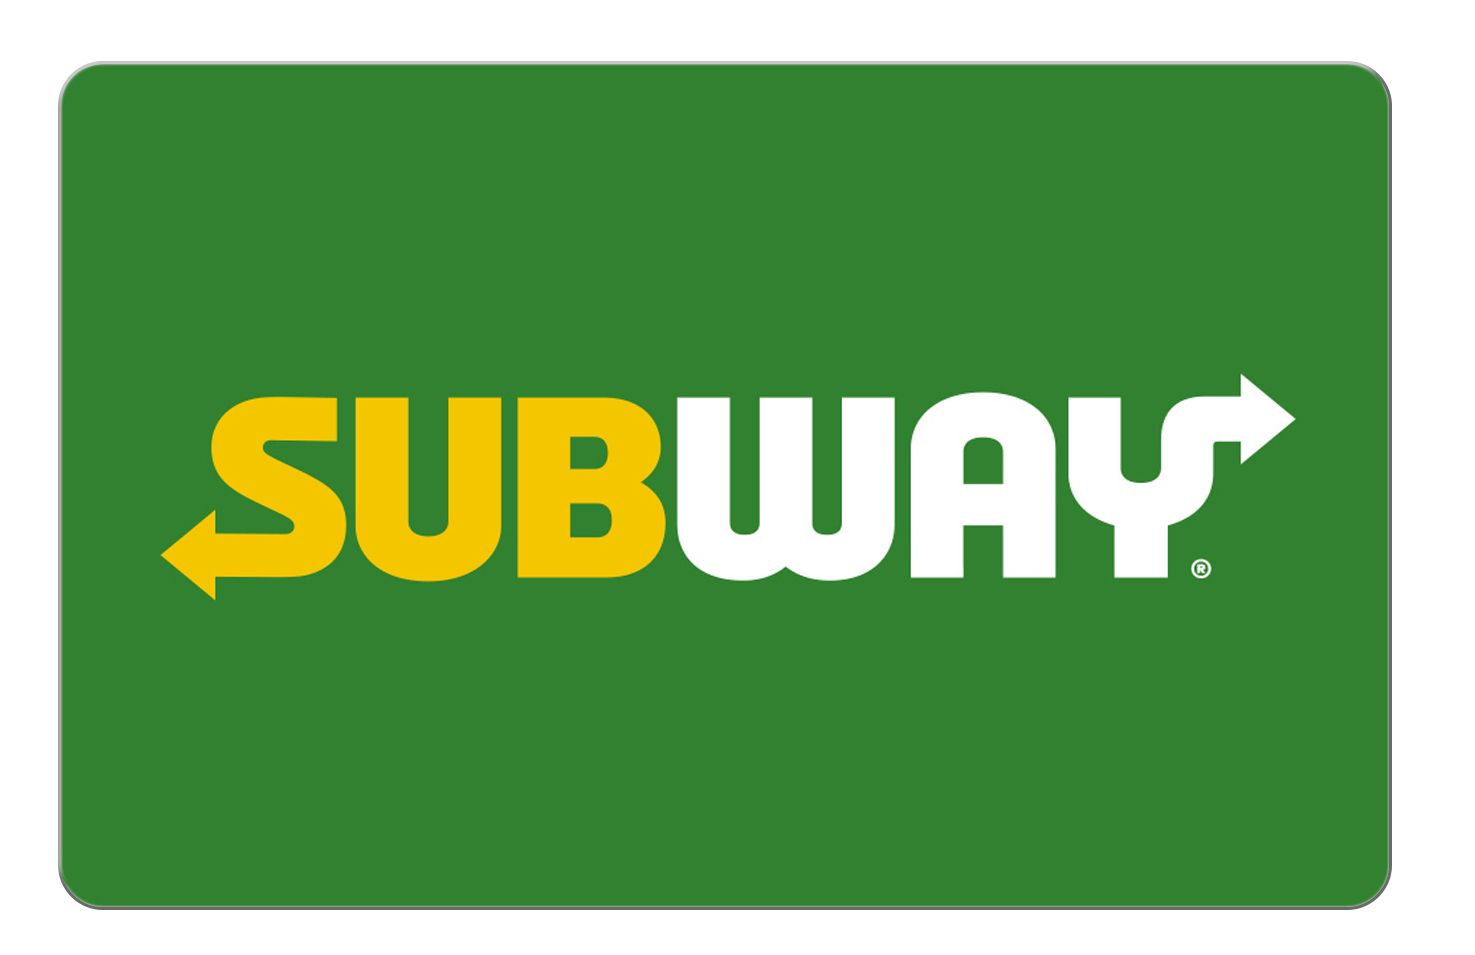 Subway Specials  Money Saving Mom®